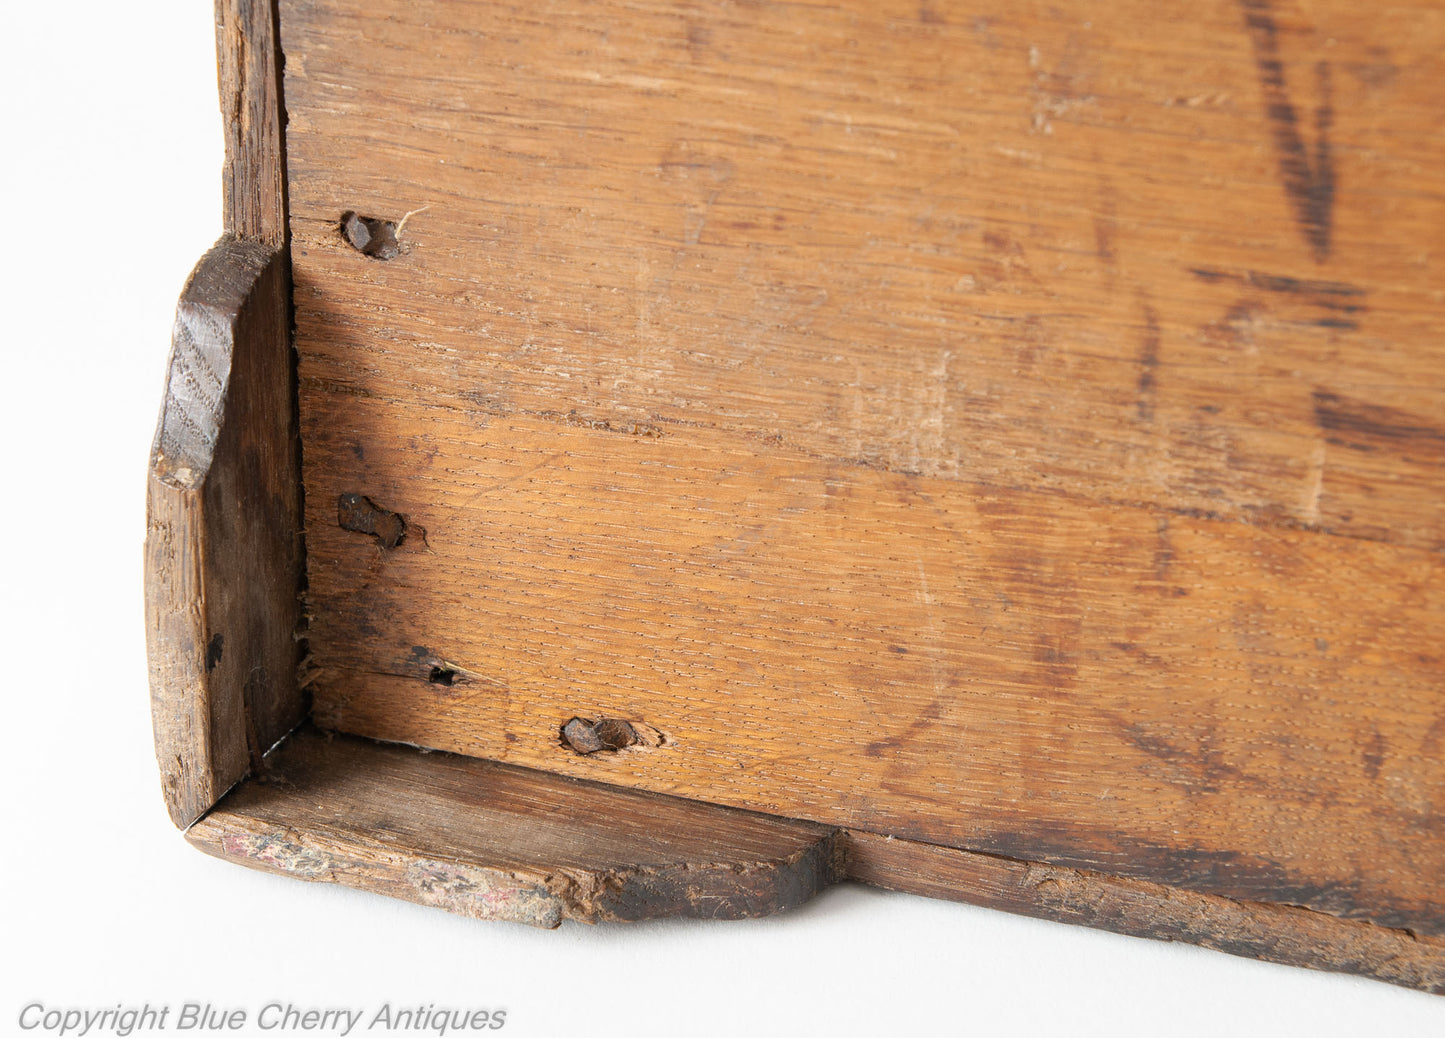 Antique George III English Provincial Oak Wood Document Chest/Bible Box (Code 1733)